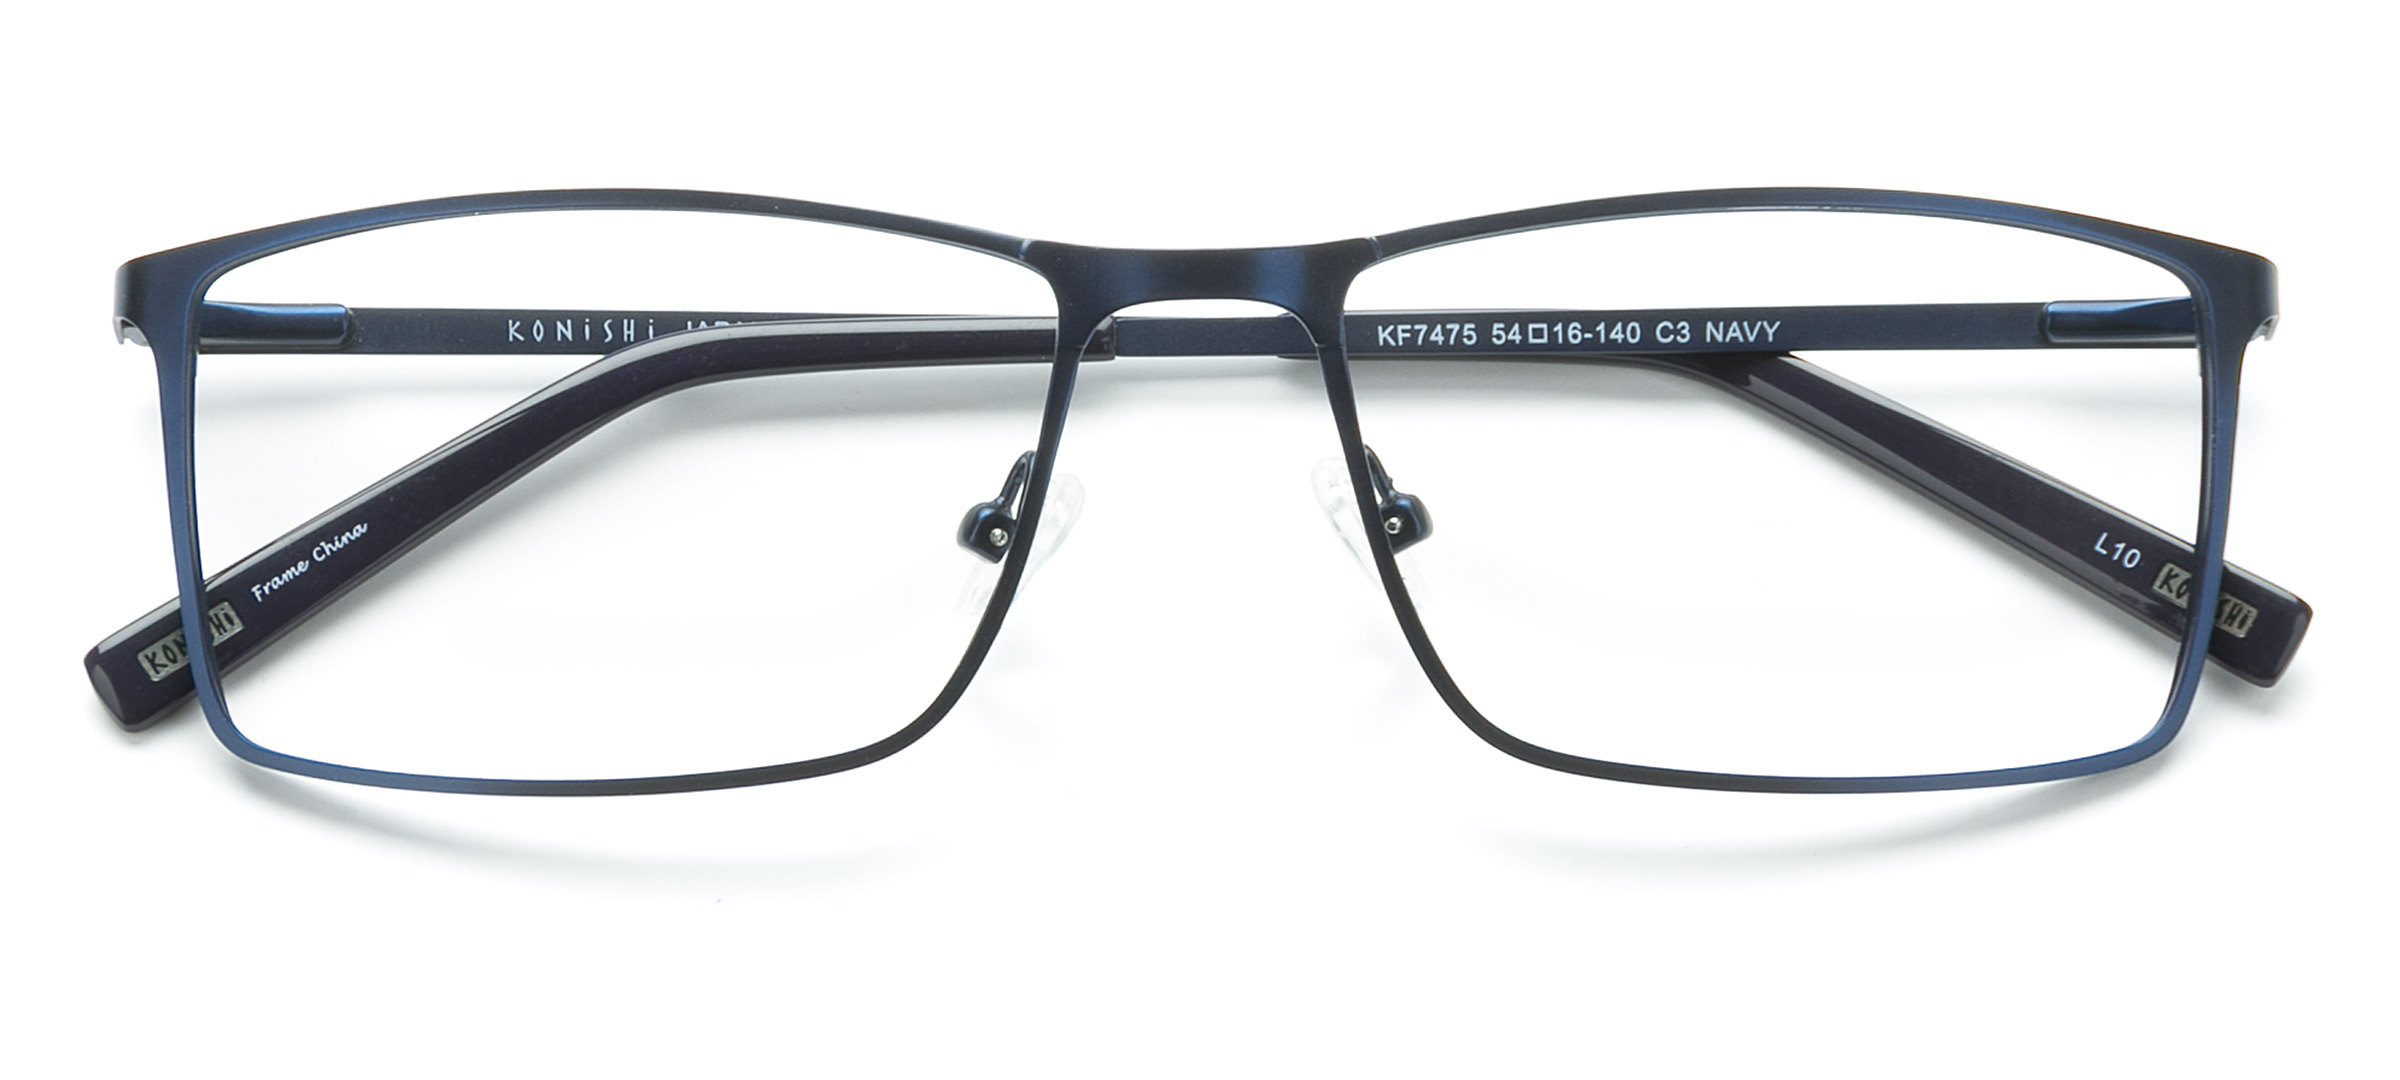 Prescription Glasses Online - Complete Eyeglasses from $50